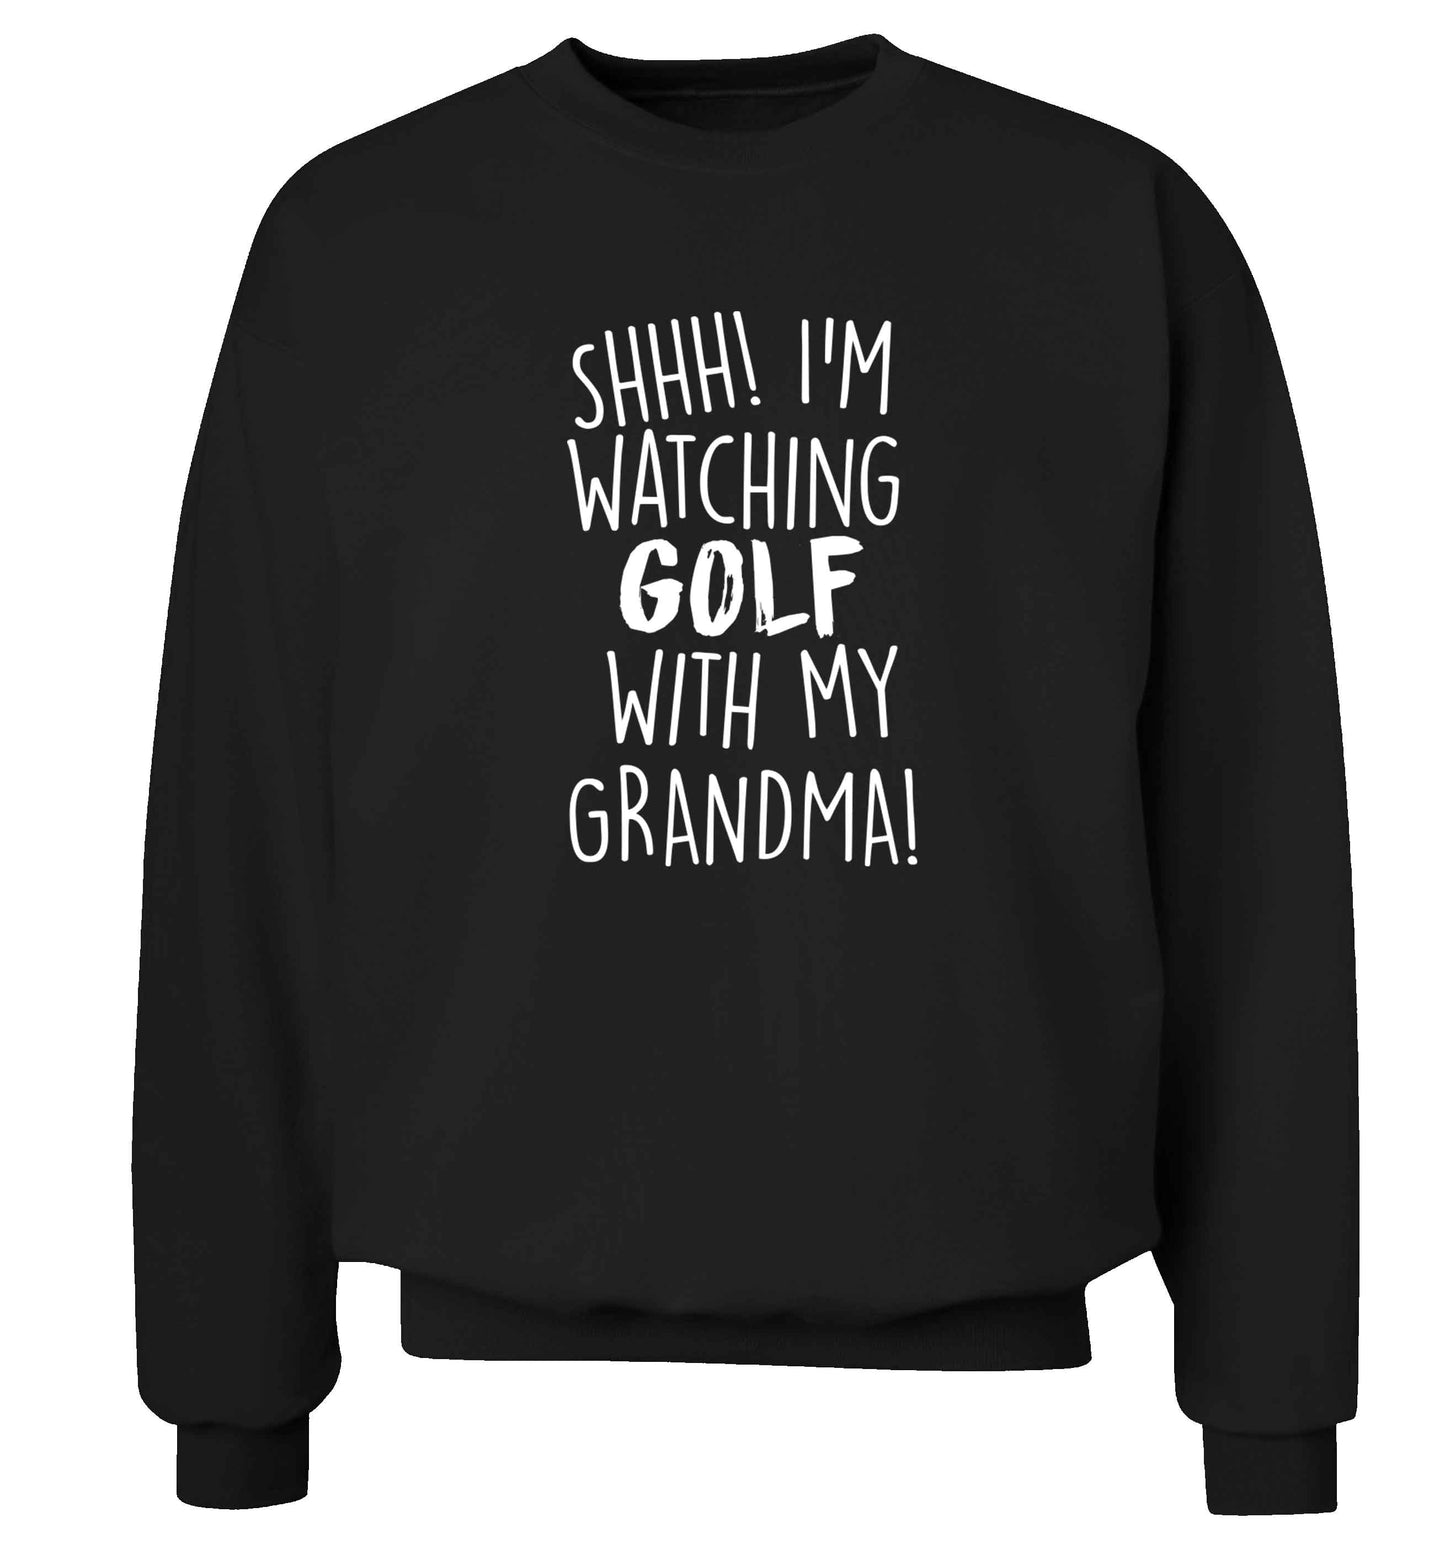 Shh I'm watching golf with my grandma Adult's unisex black Sweater 2XL